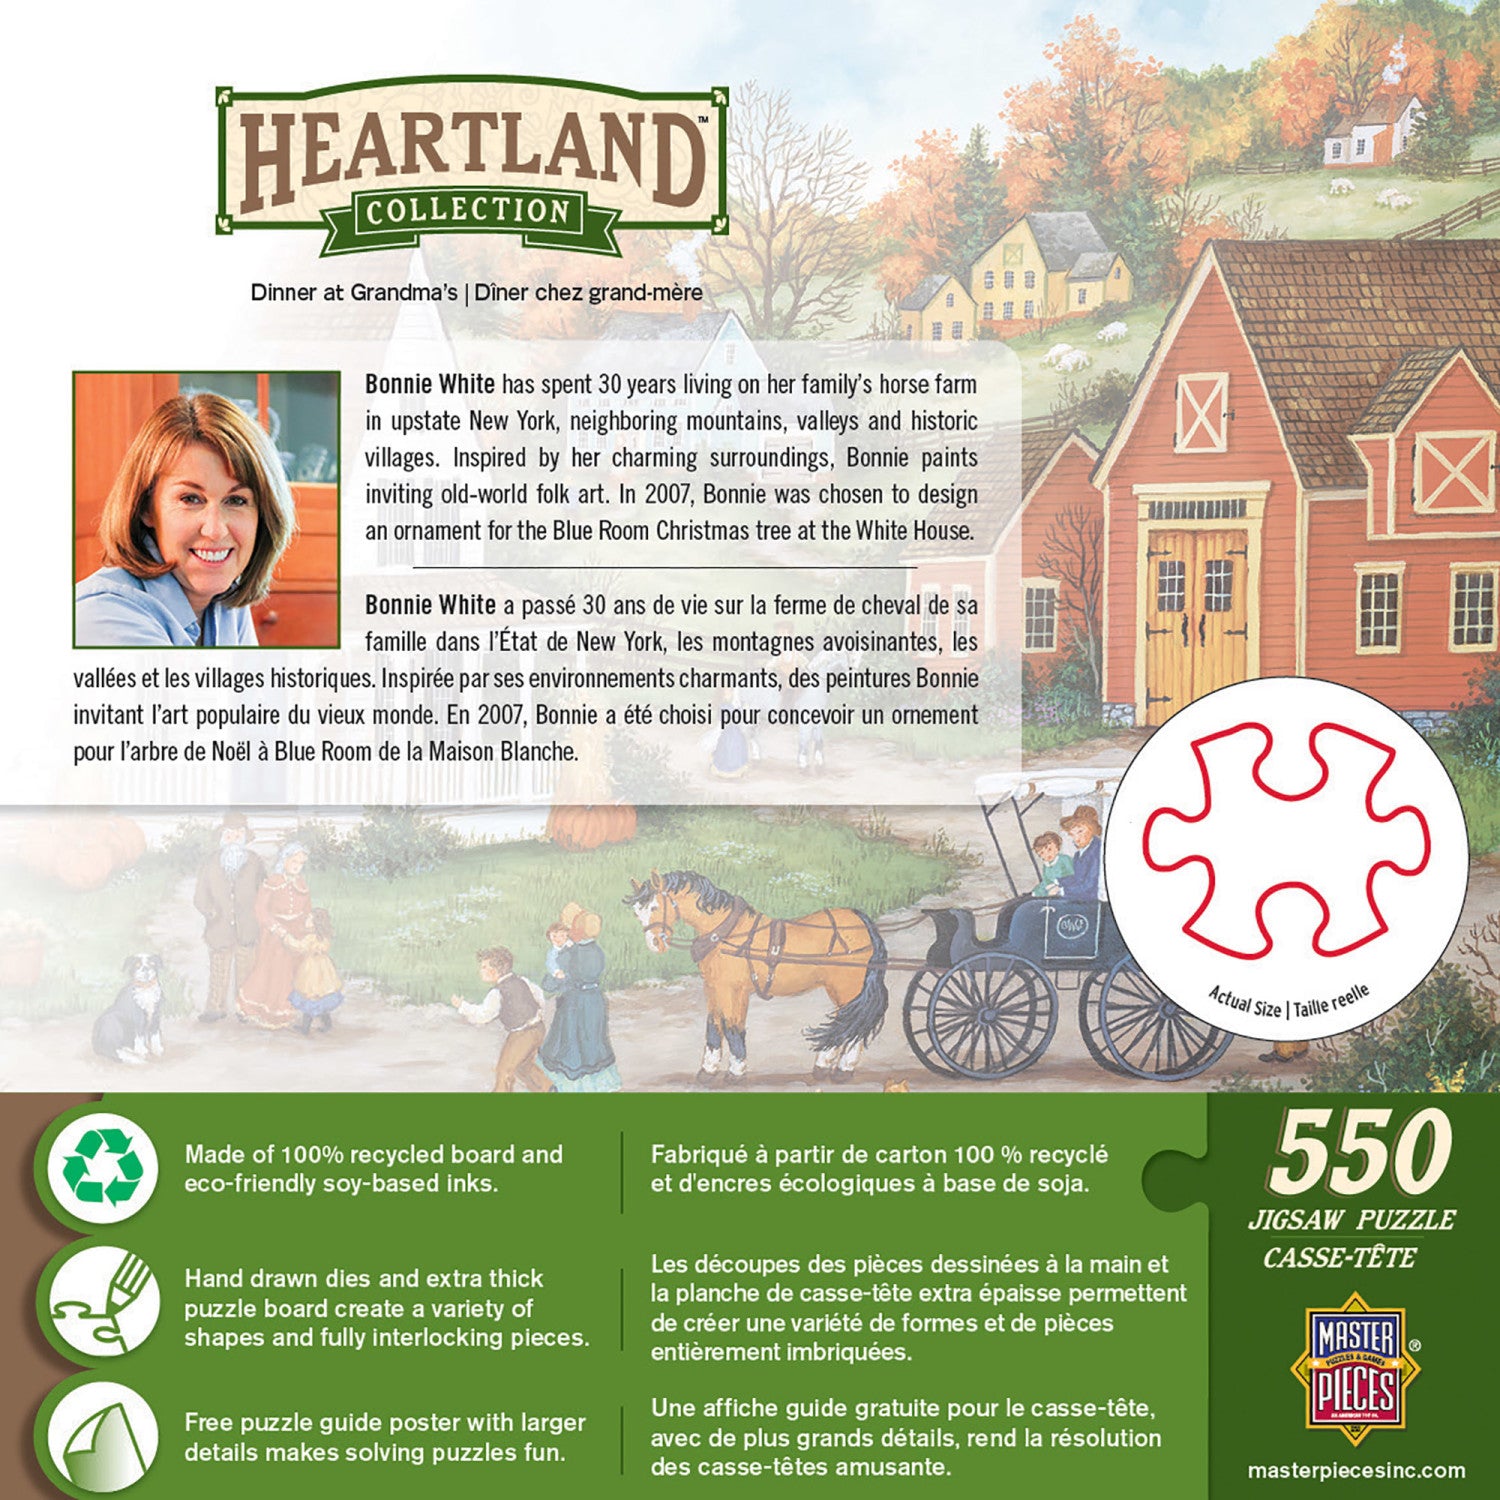 Heartland - Dinner at Grandmas 550 Piece Jigsaw Puzzle